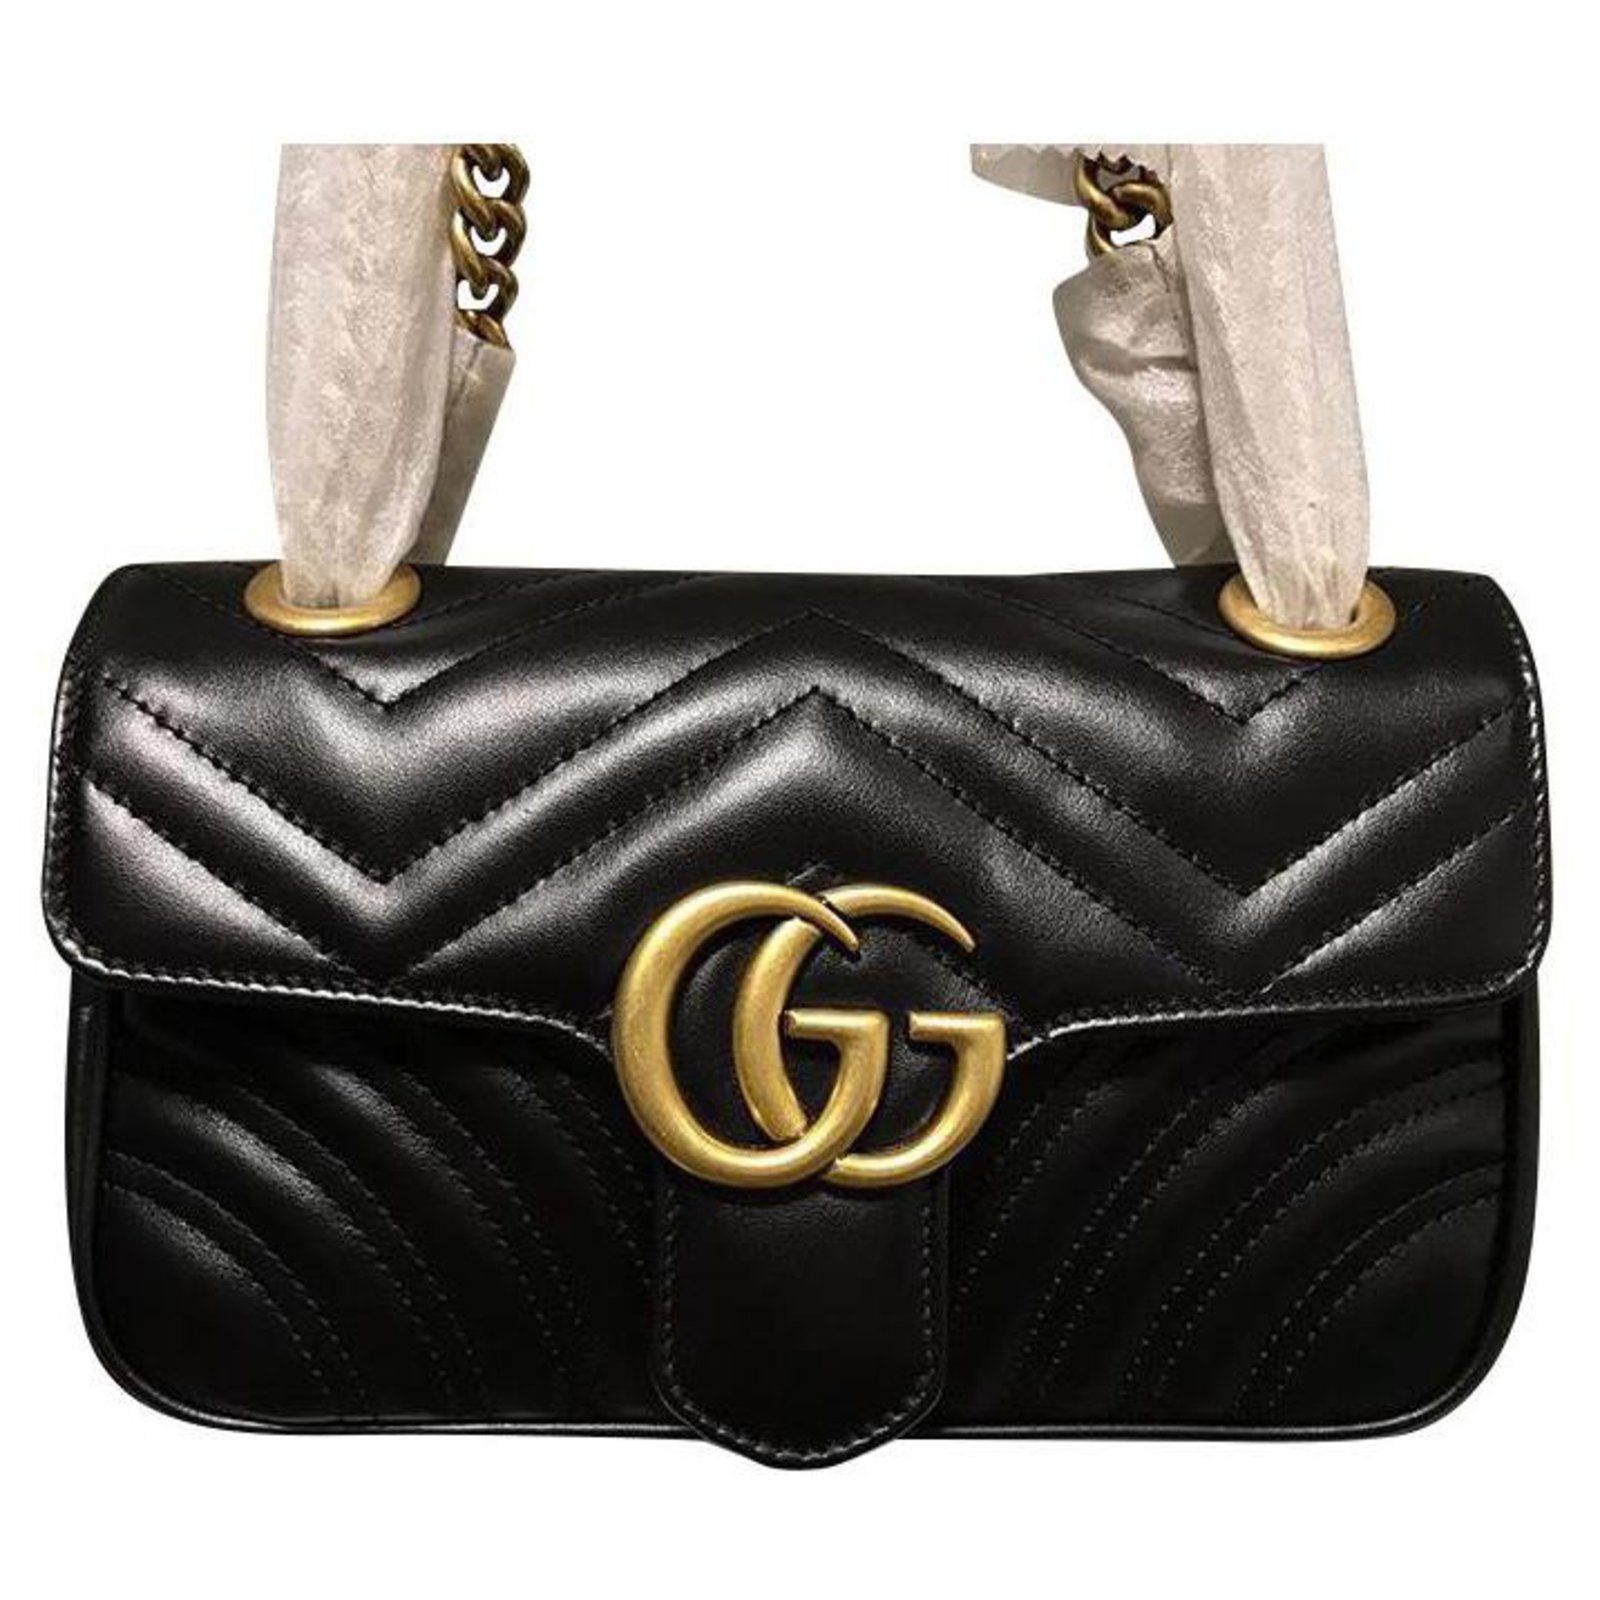 gucci quilted handbag